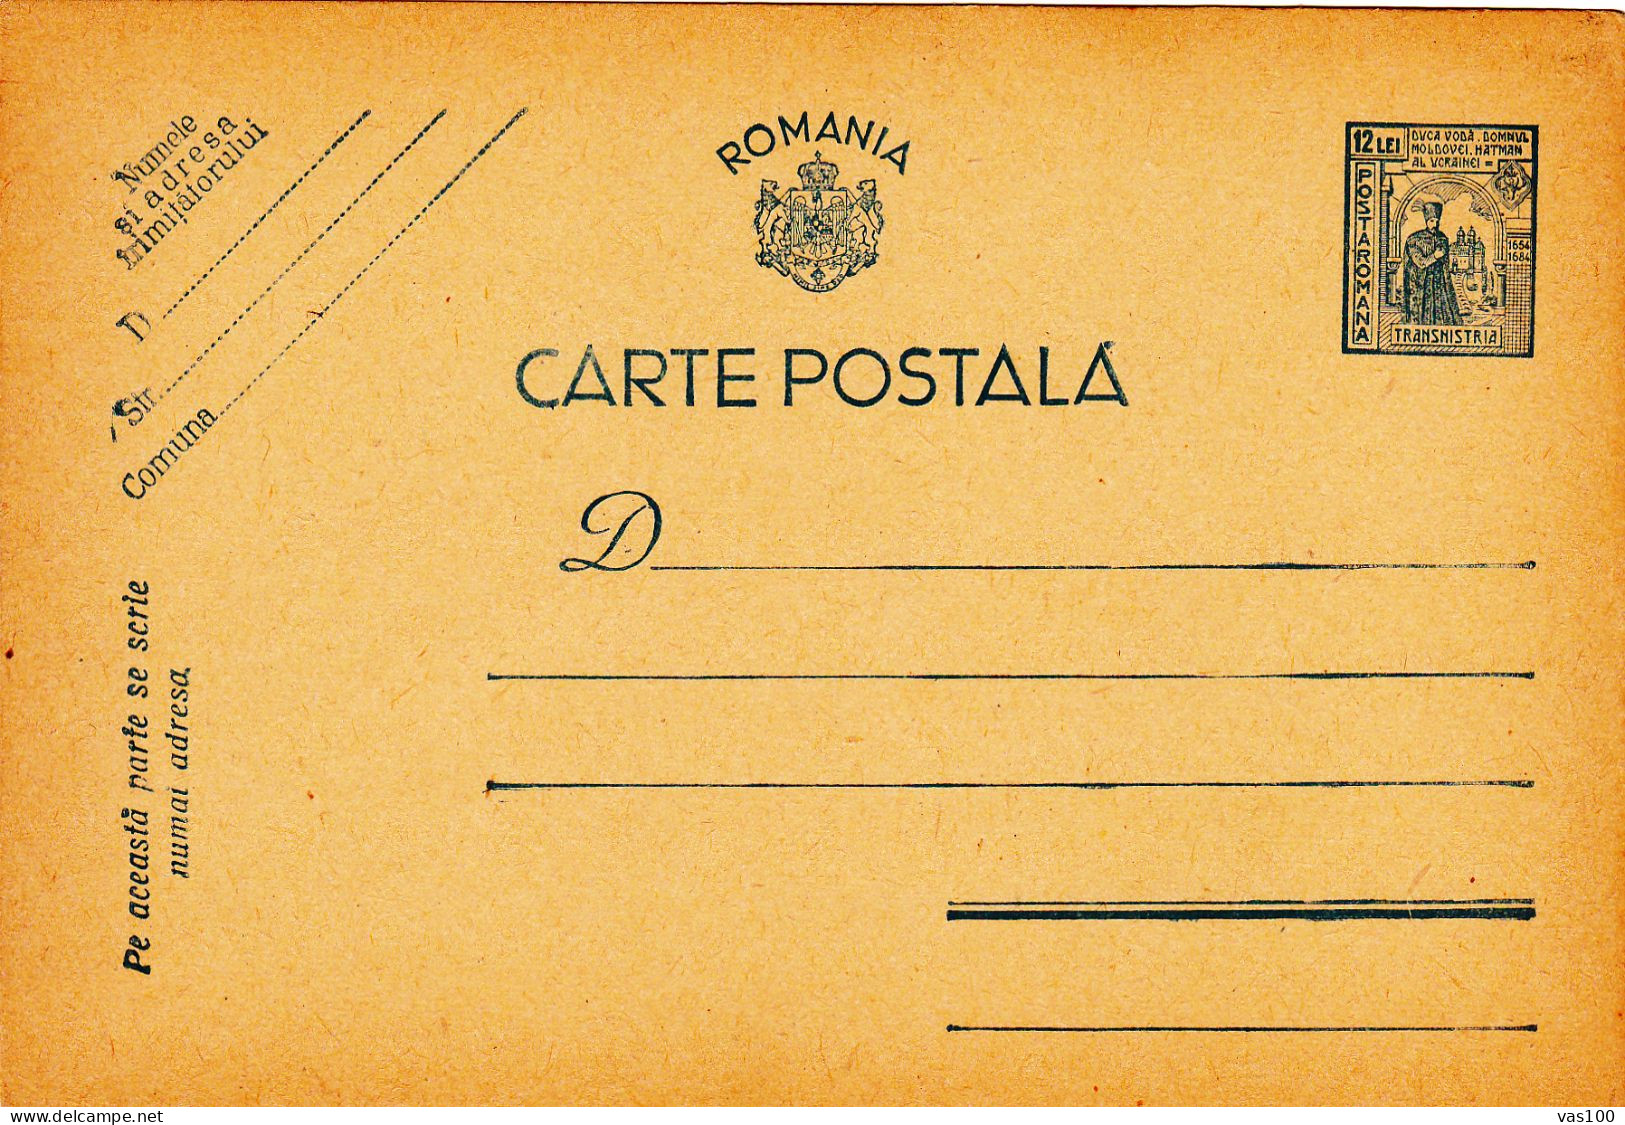 ROUMANIE / TRANSNISTRIE - ROMANIA / TRANSNISTRIA 1943, POSTCARD STATIONERY UNUSED,ROMANIA. - Lettres & Documents